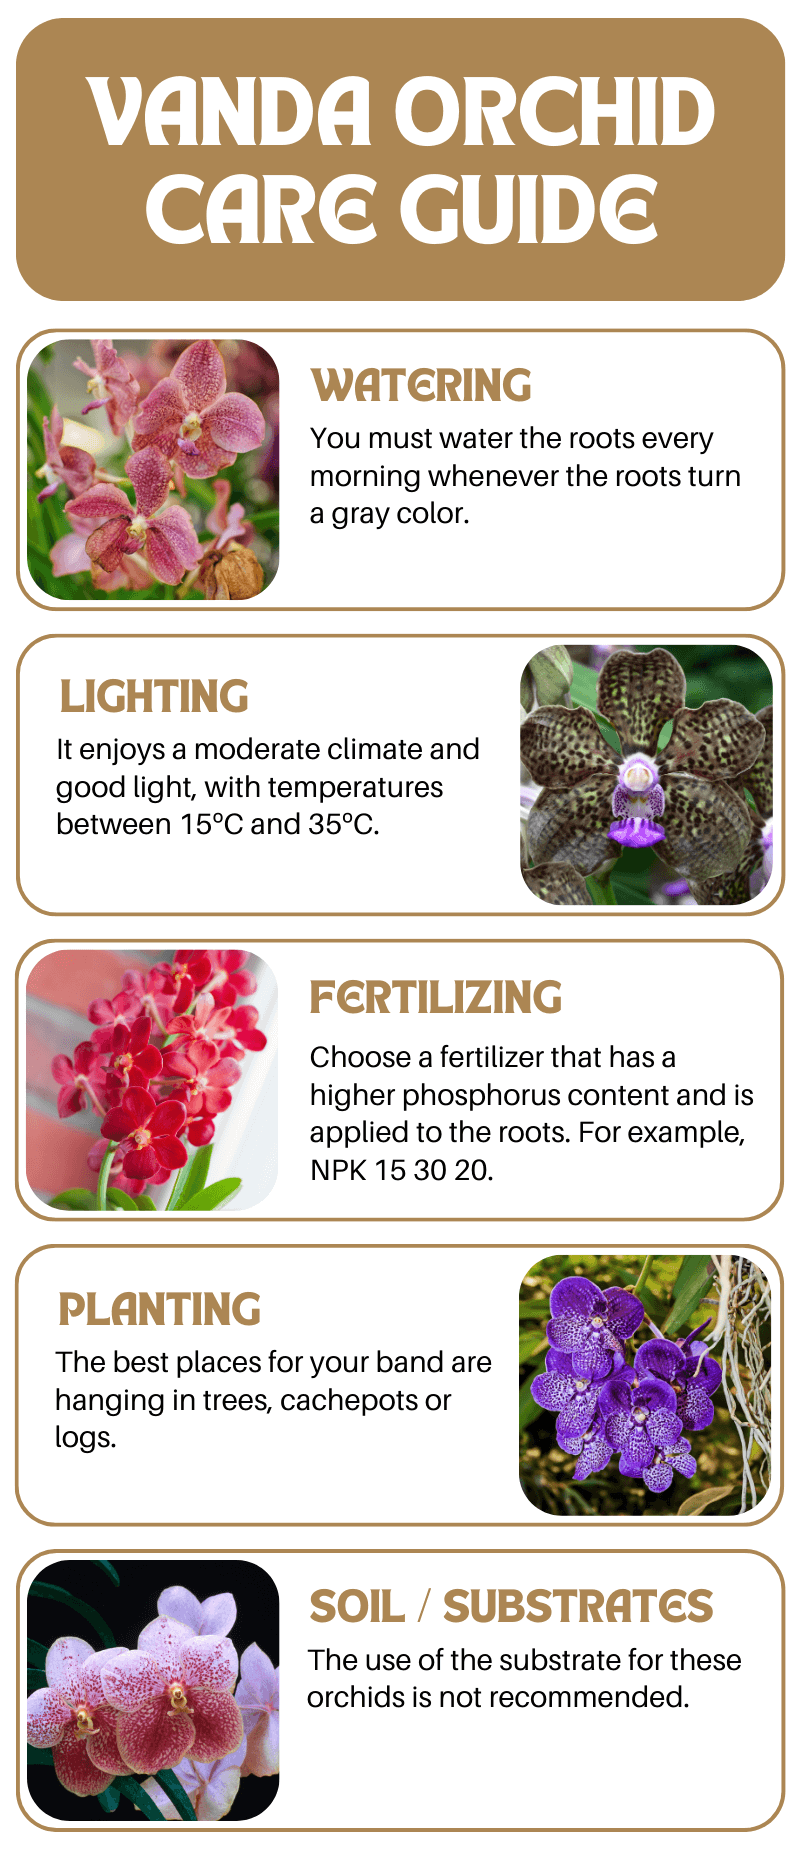 Vanda orchid infographic